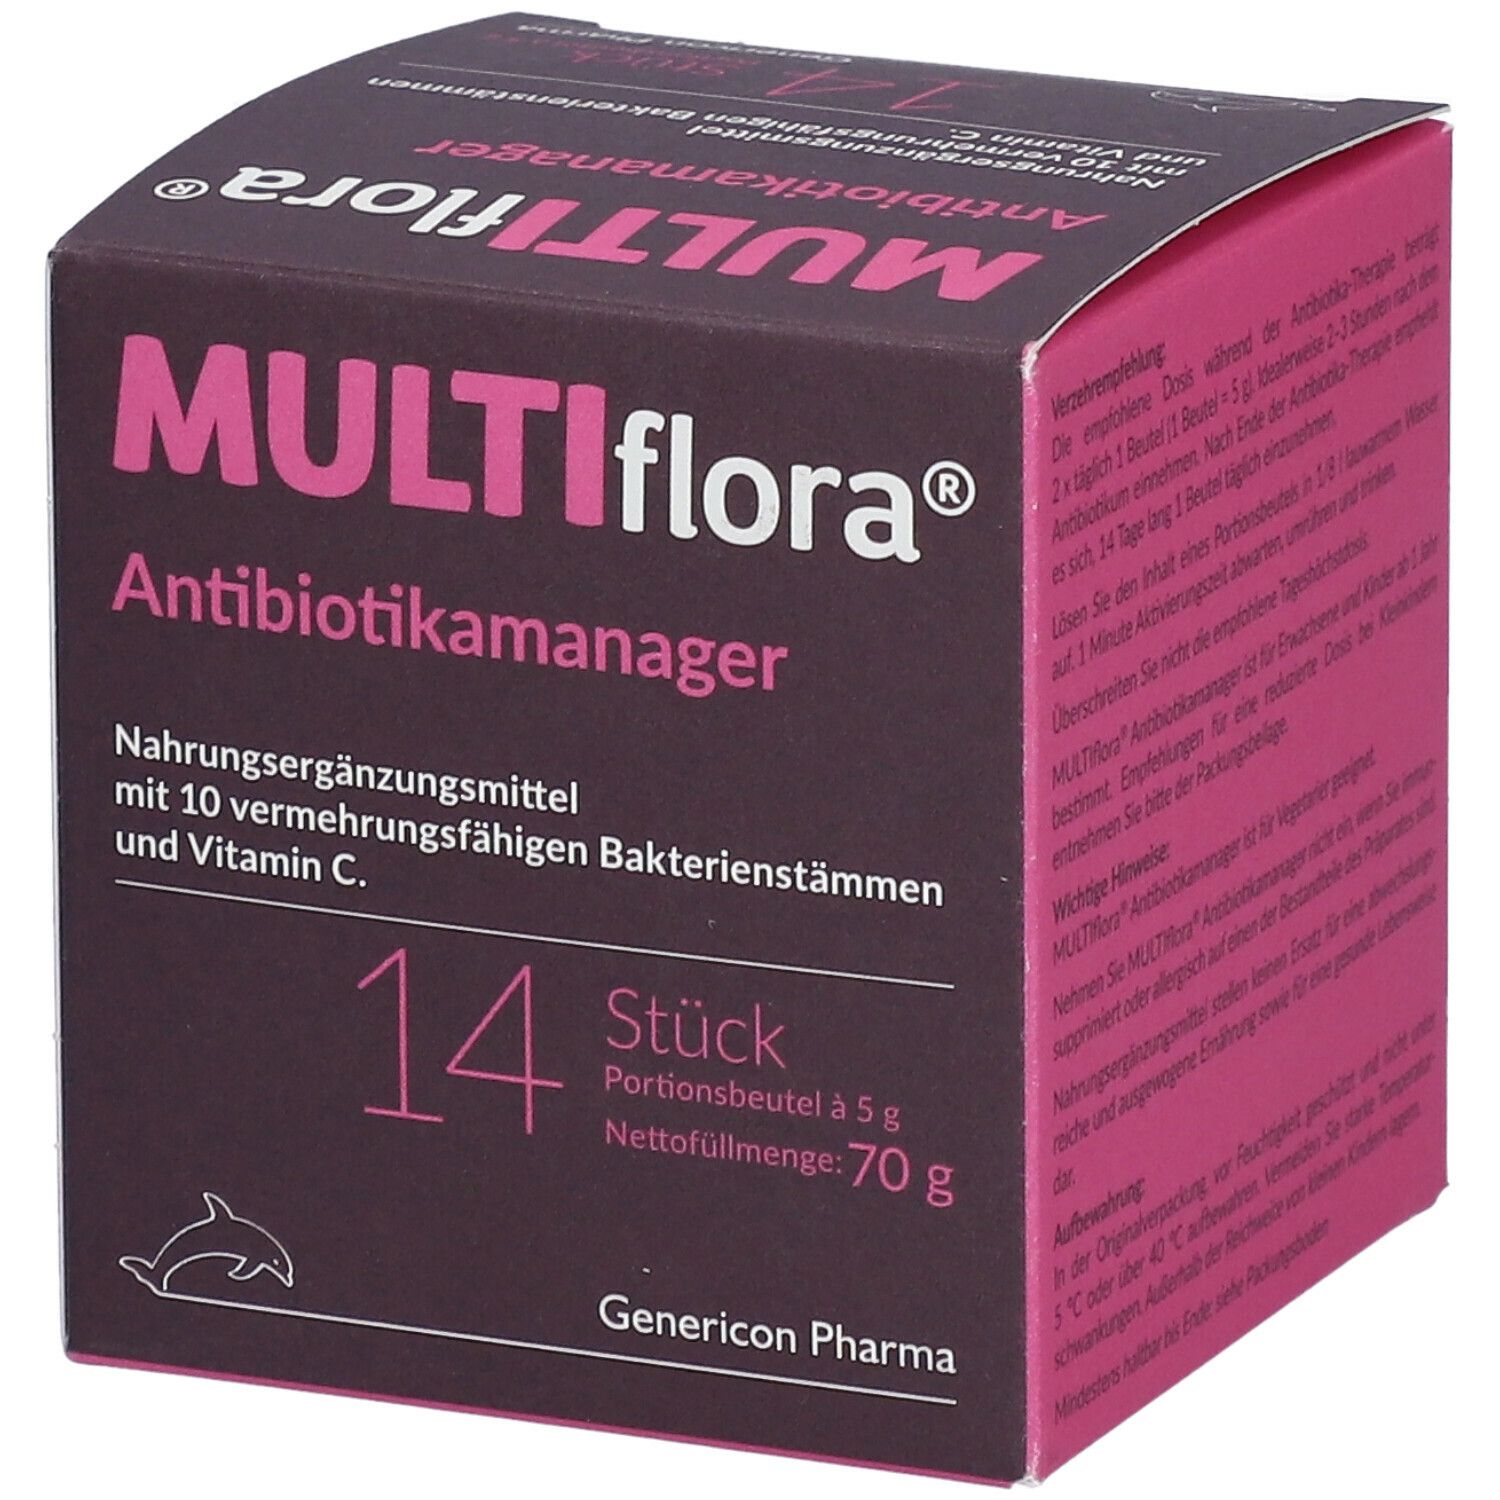 MULTIflora® Antibiotikamanager